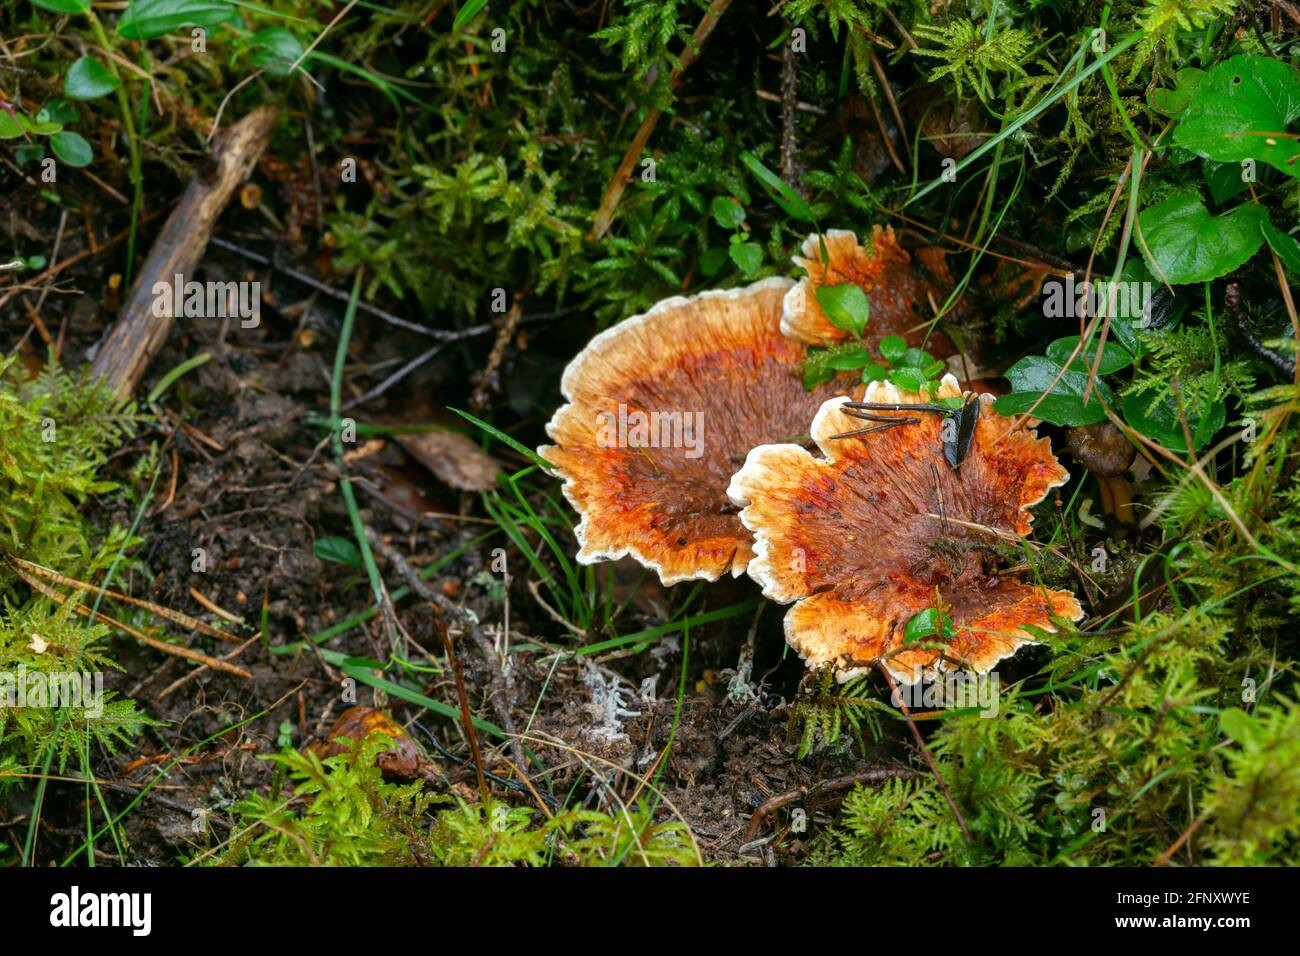 Orange spine, Hydnellum aurantiacum growing in natural environment Stock Photo